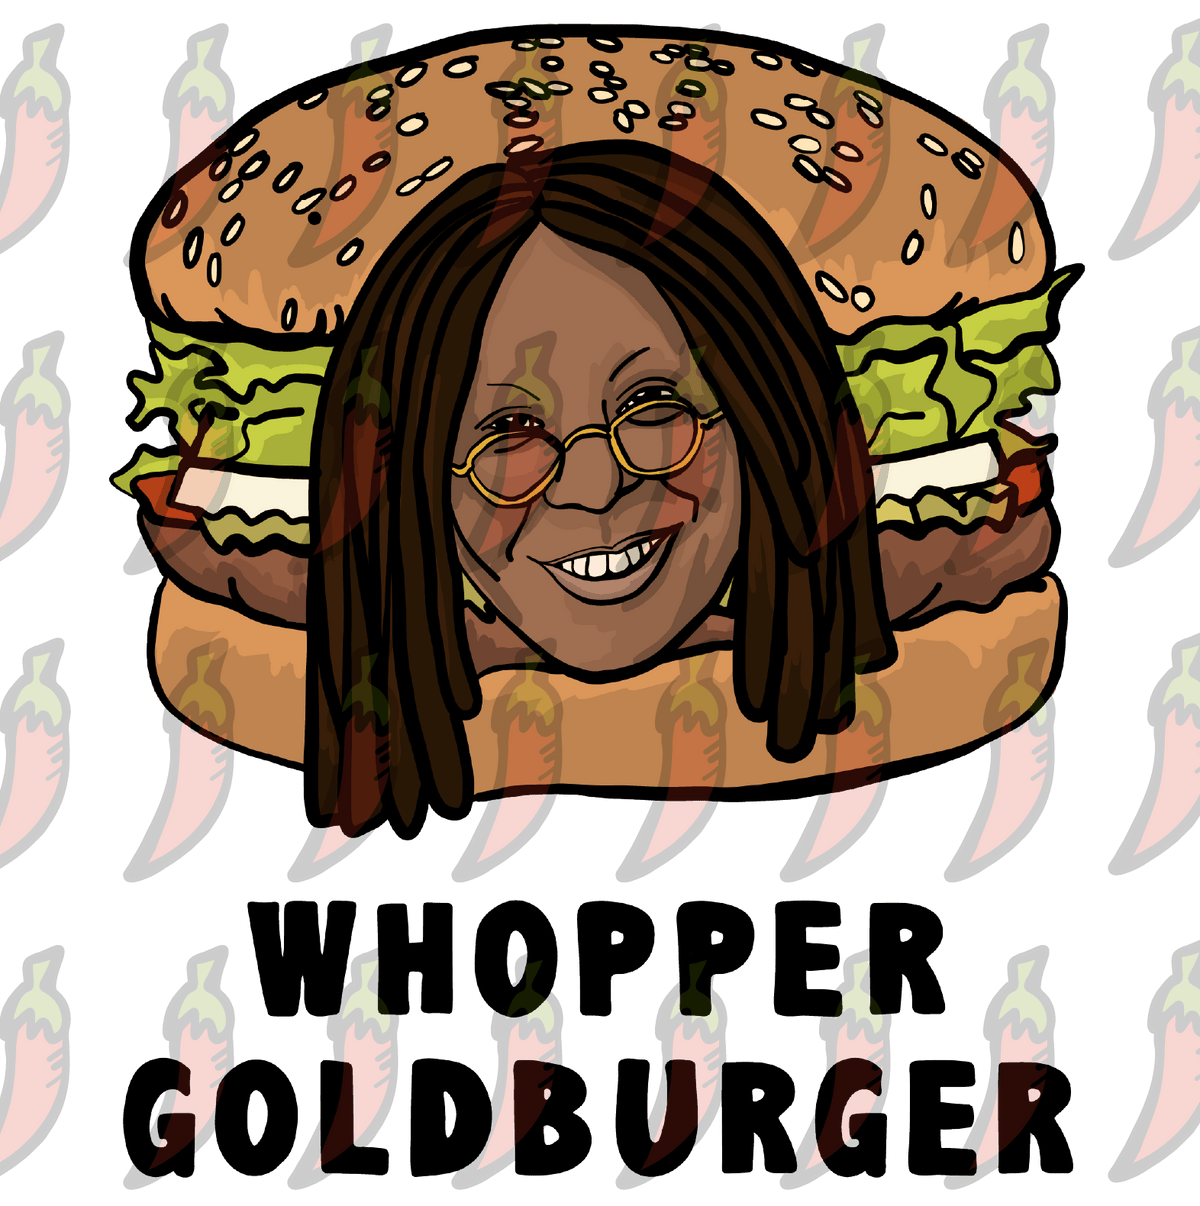 Whopper Goldburger 🍔 - Coffee Mug